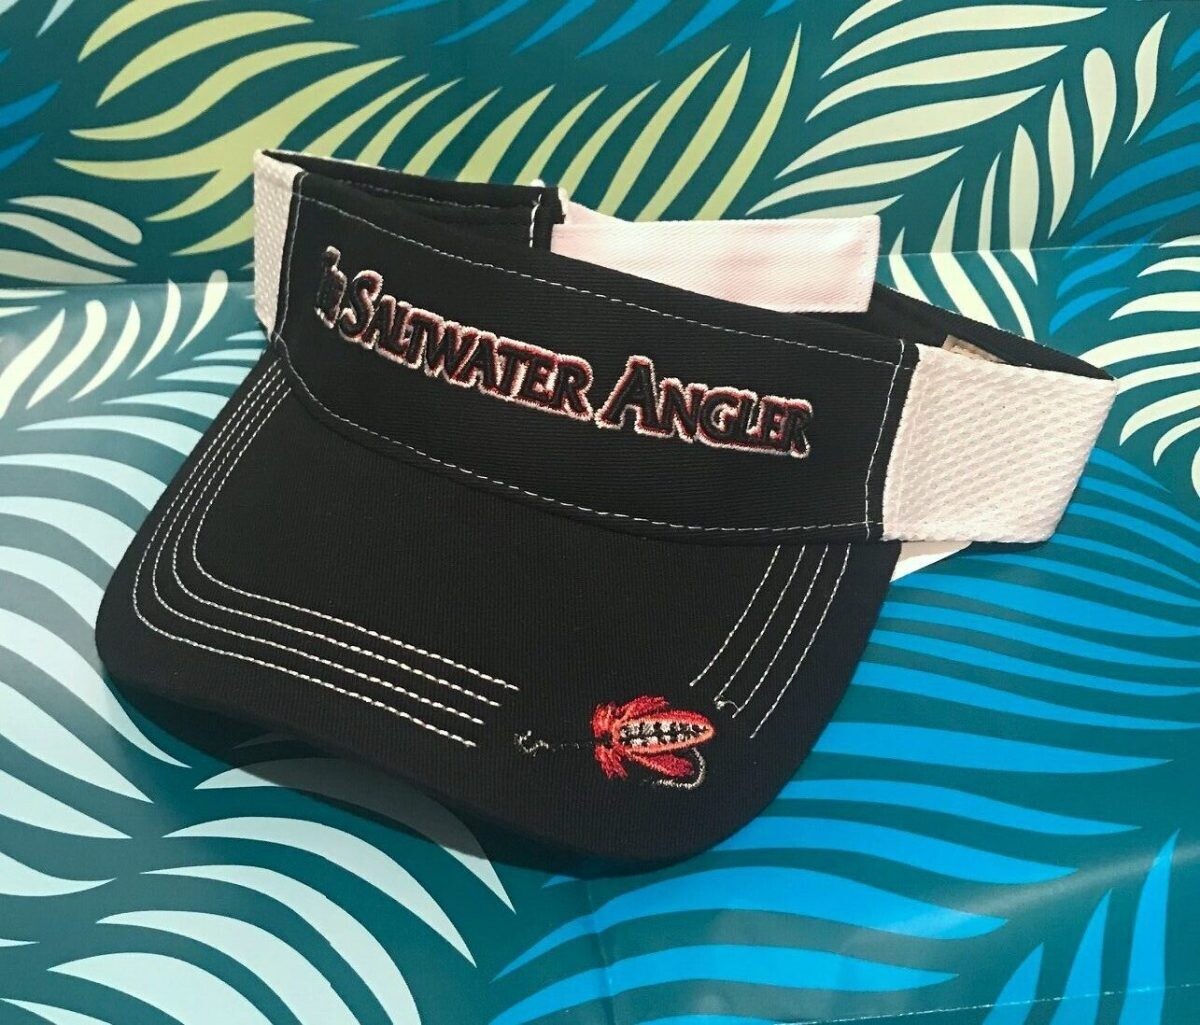 Black visor with Saltwater Angler logo